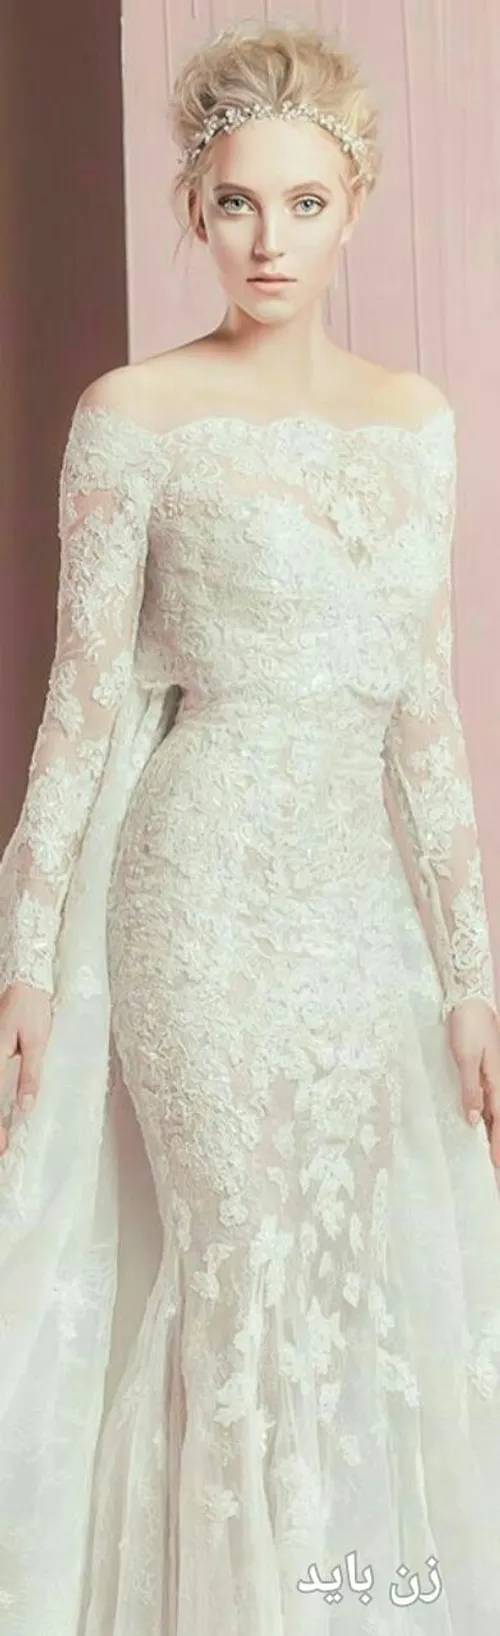 لباس عروس مد